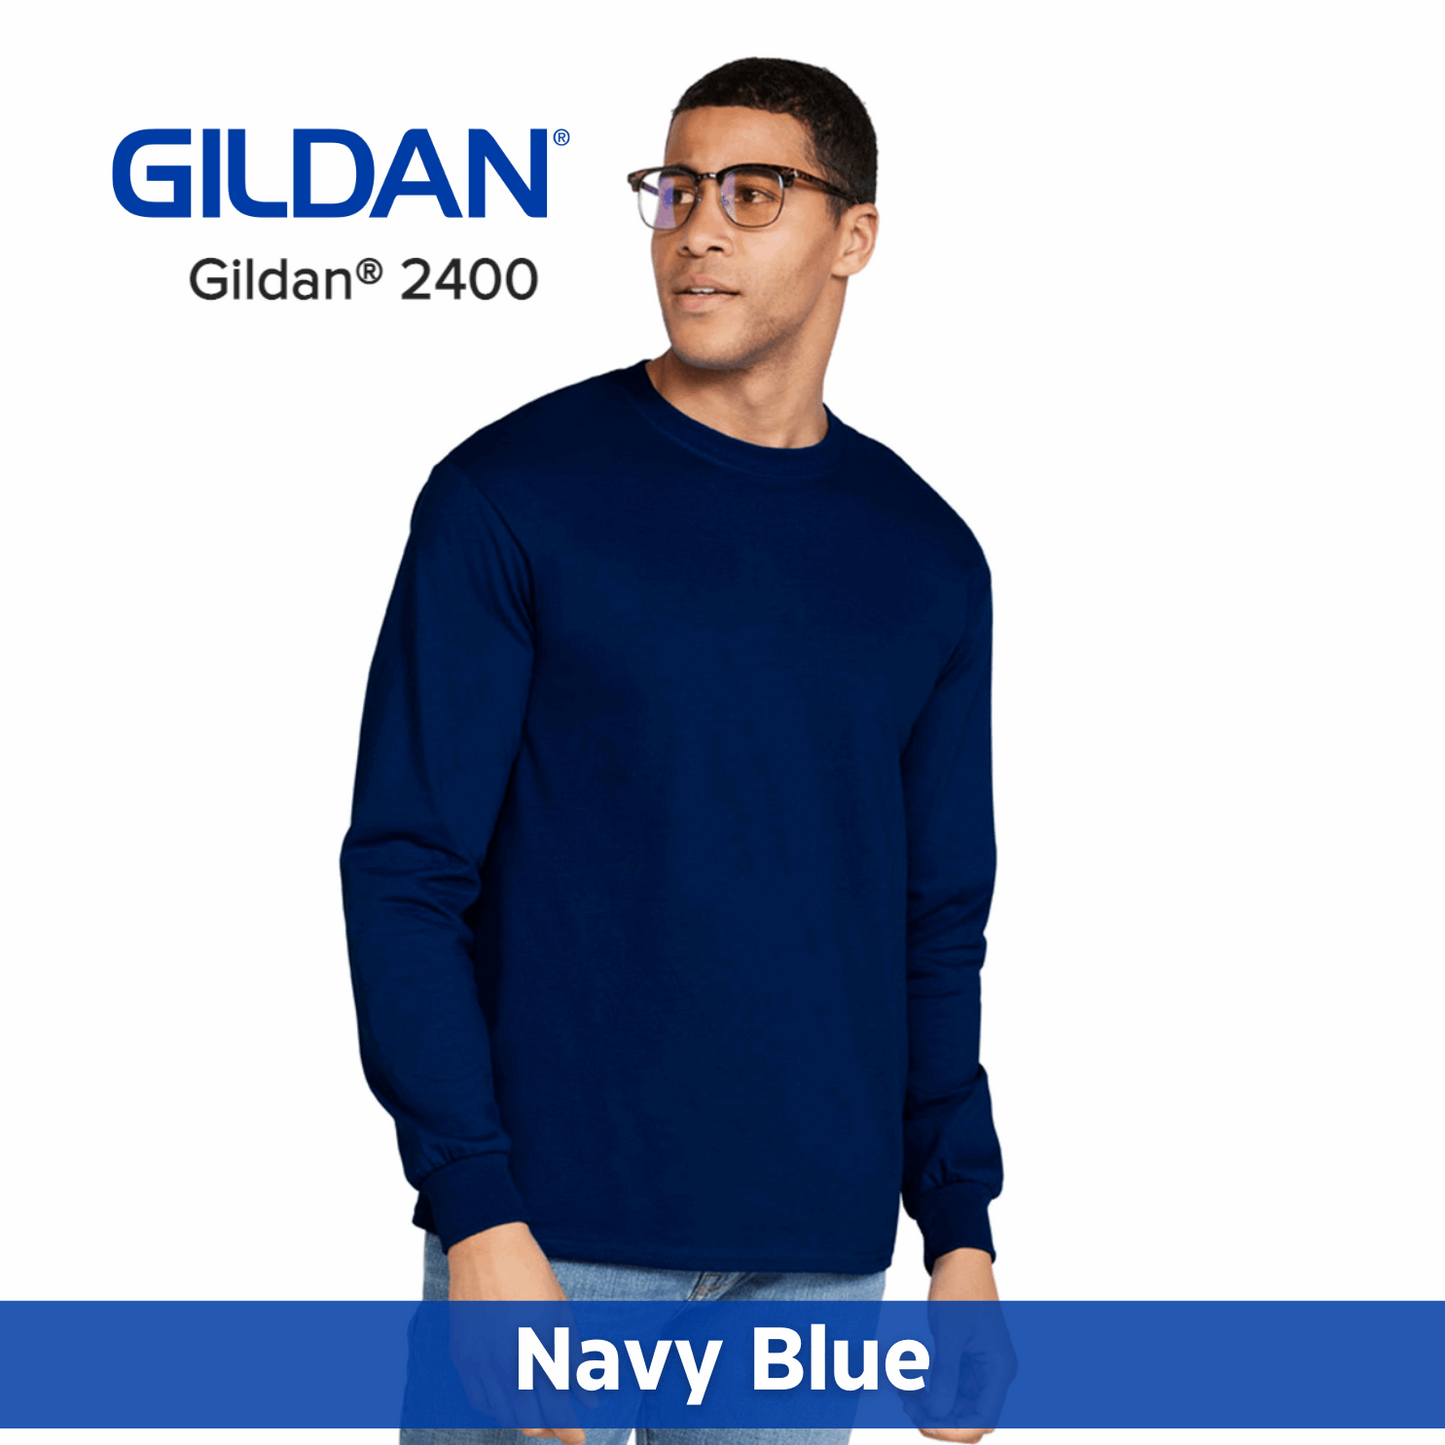 One Color Imprint Front & Back Gildan® 2400 Long Sleeve T-Shirt 100% Cotton Multiple Colors Available